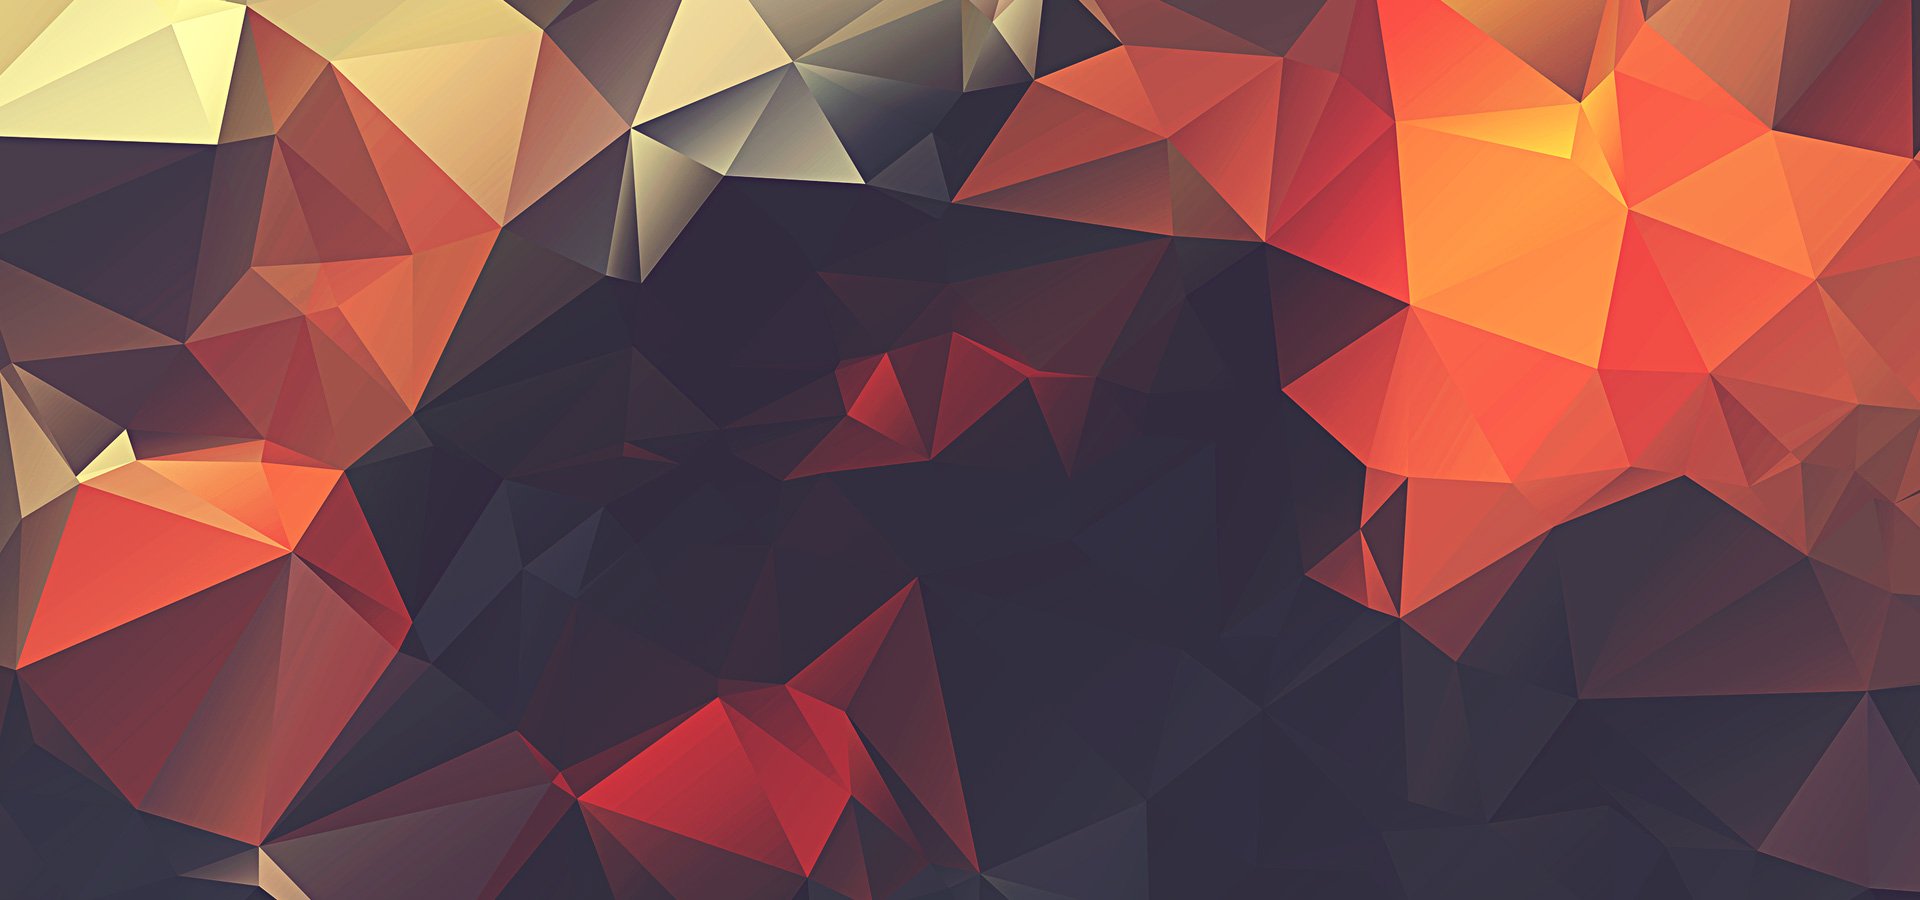 20+ Polygon Backgrounds | Free & Premium Templates